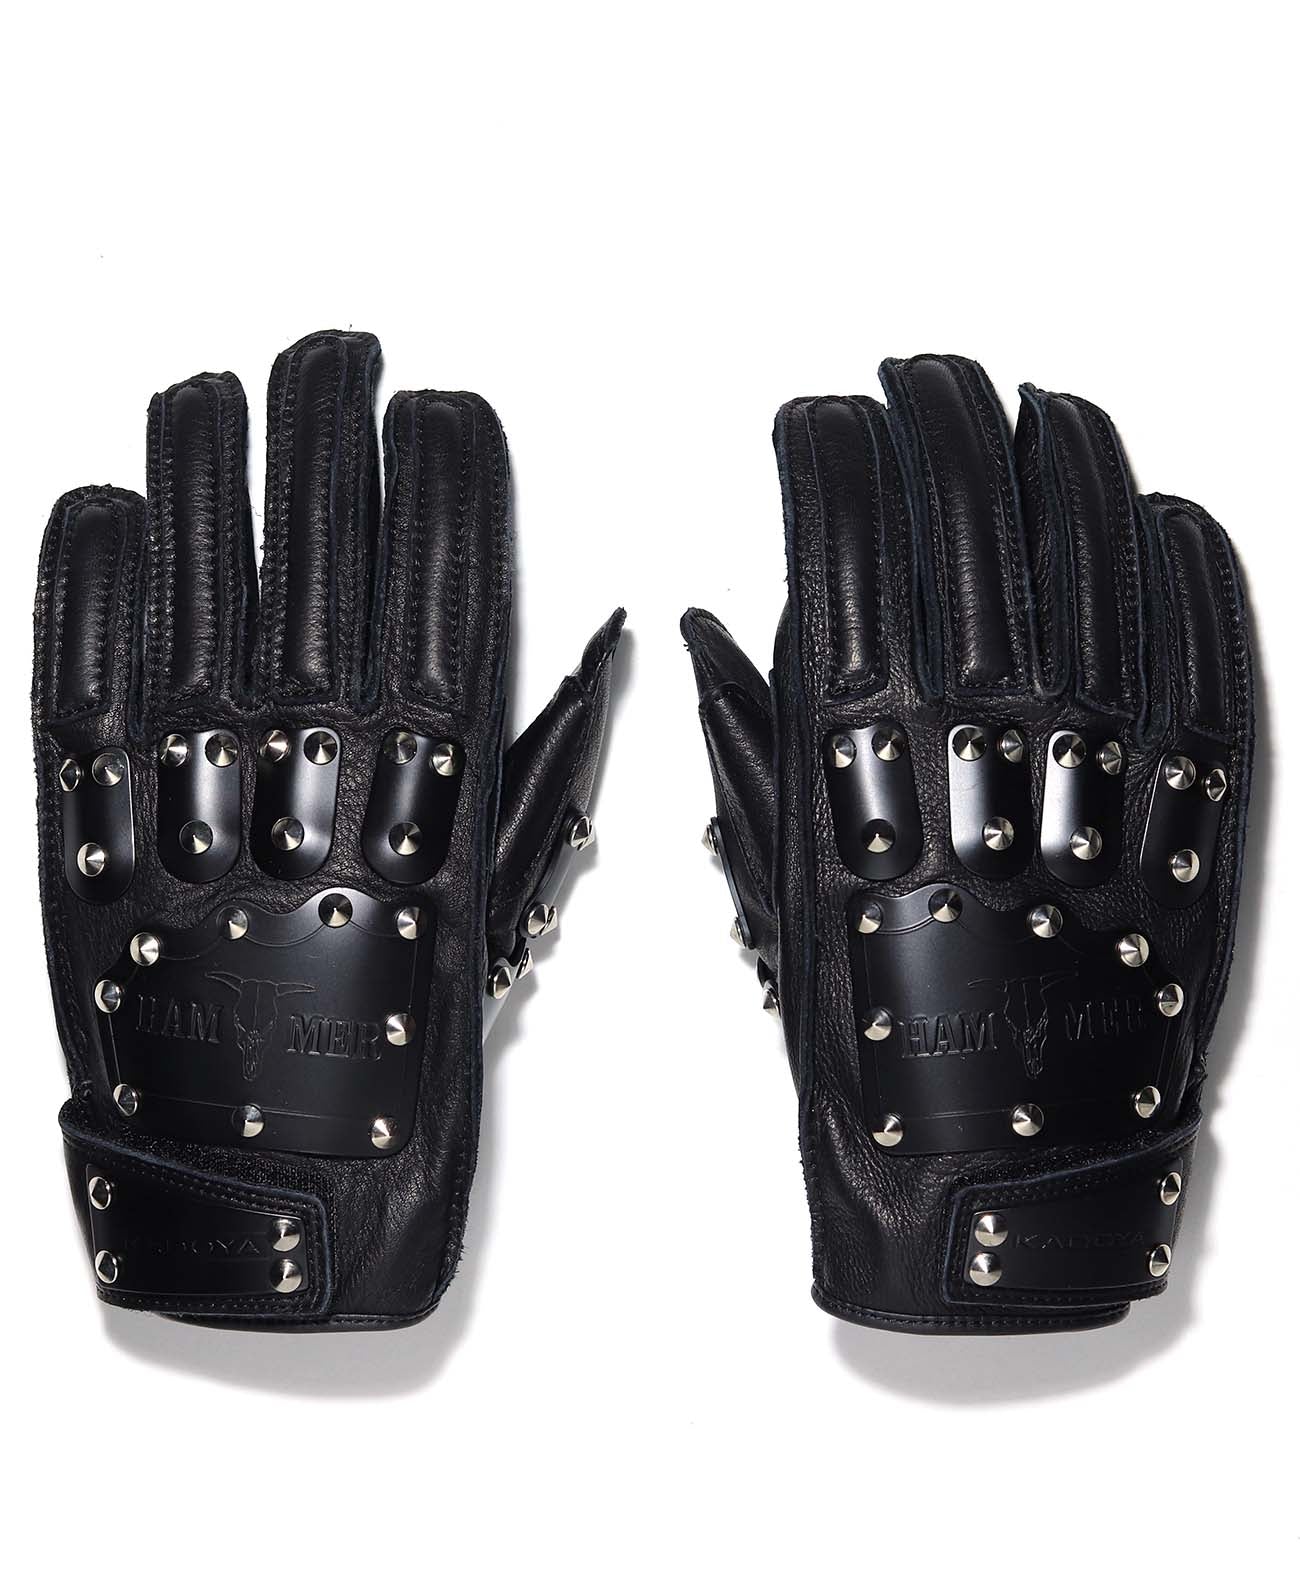 Hammer Glove A / Black / Black